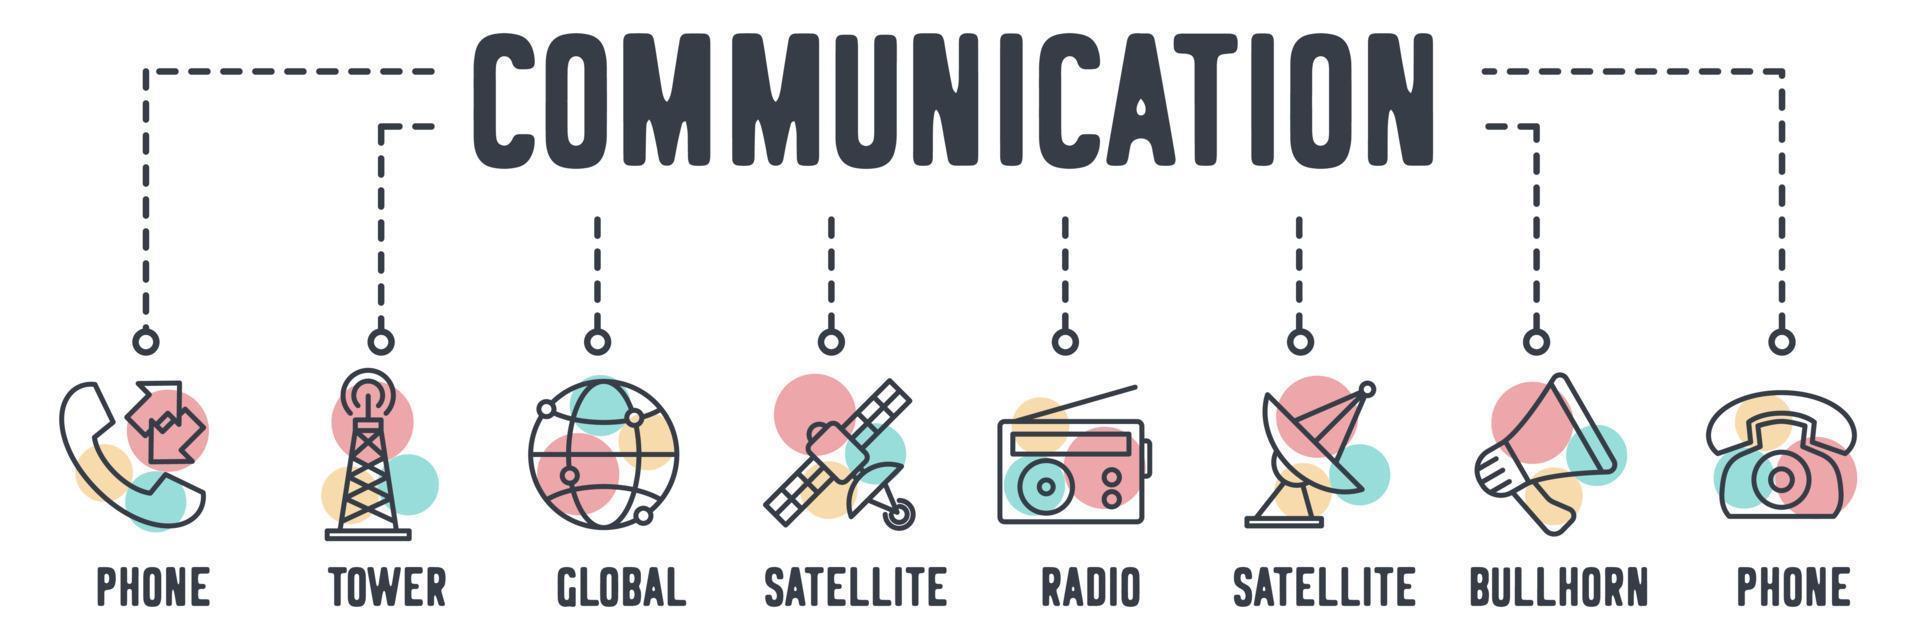 kommunikation banner webbikon. telefonkonversation, broadcast torn, global anslutning, satellit, radio, antenn satellit, bullhorn, klassisk telefon vektor illustration koncept.